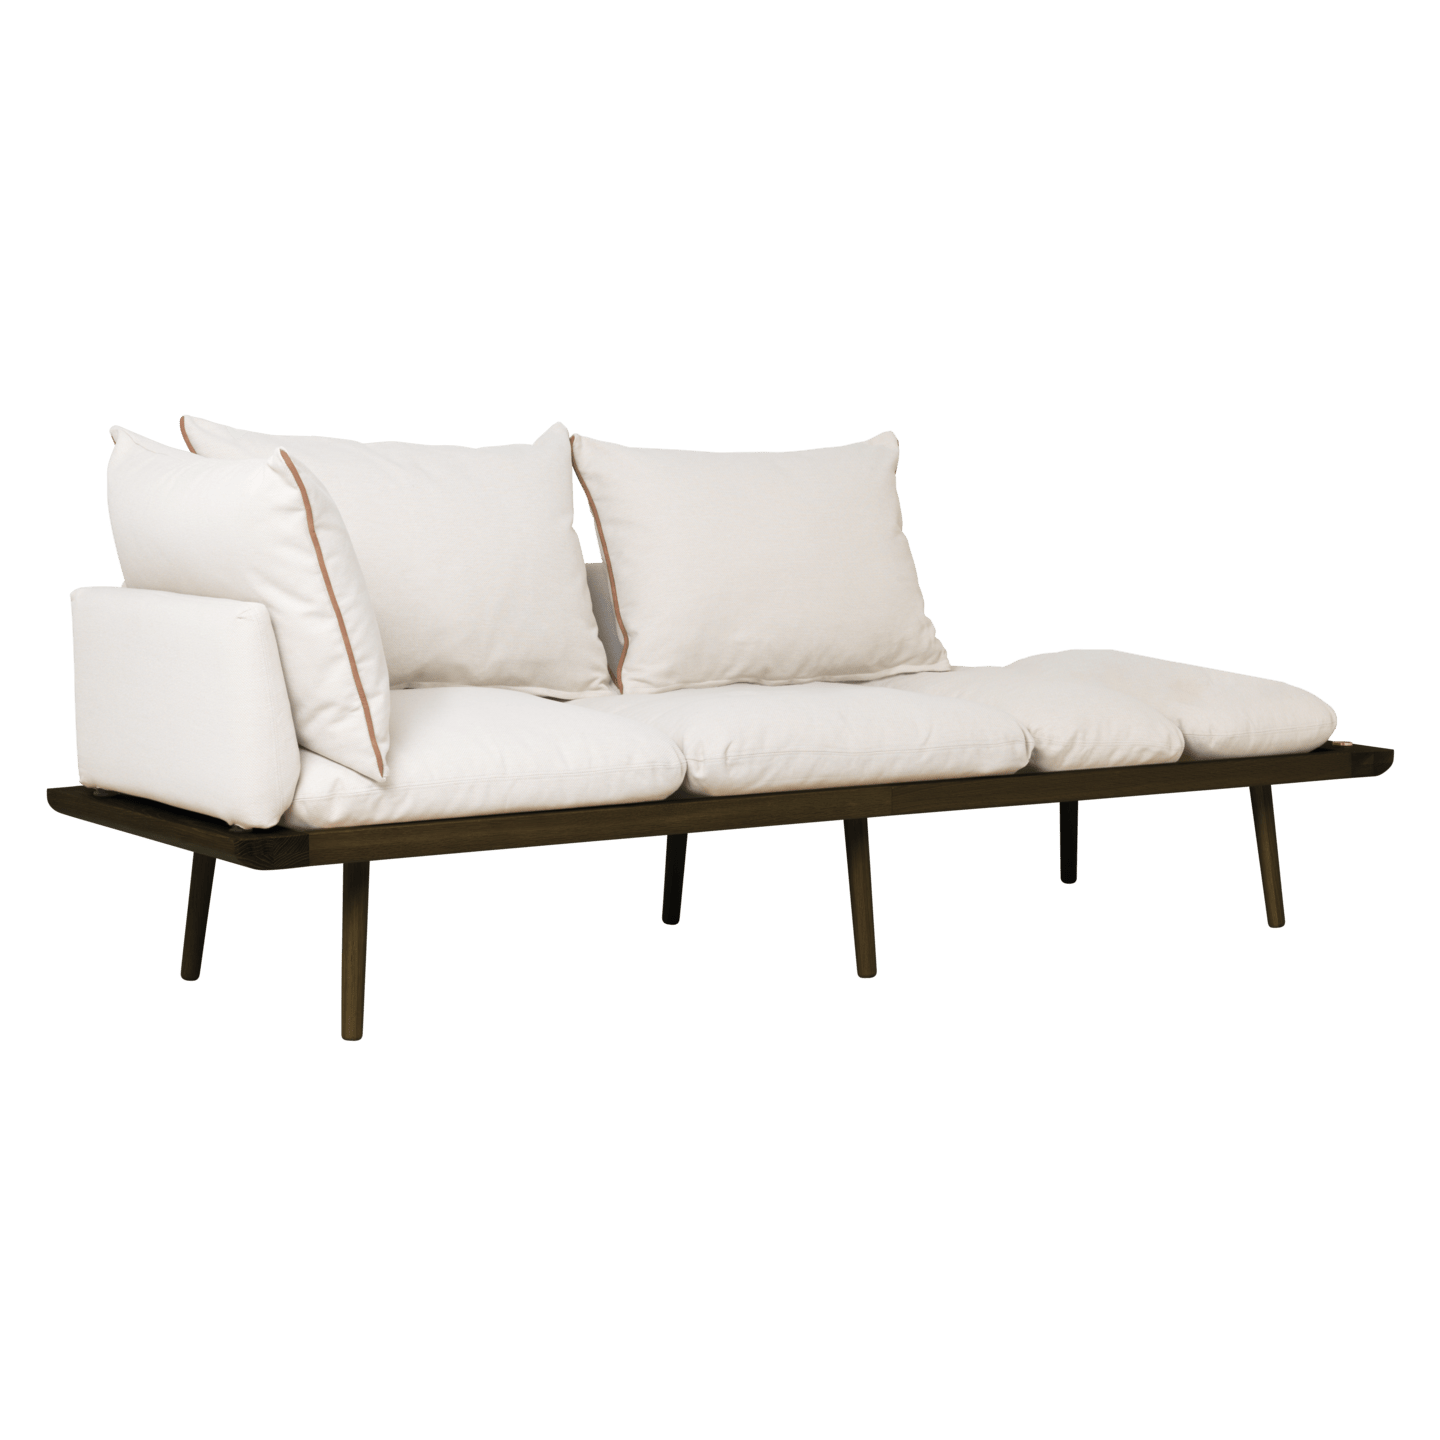 Lounge Around, 3 seter sofa, en del av kategorien - At Home Interiør